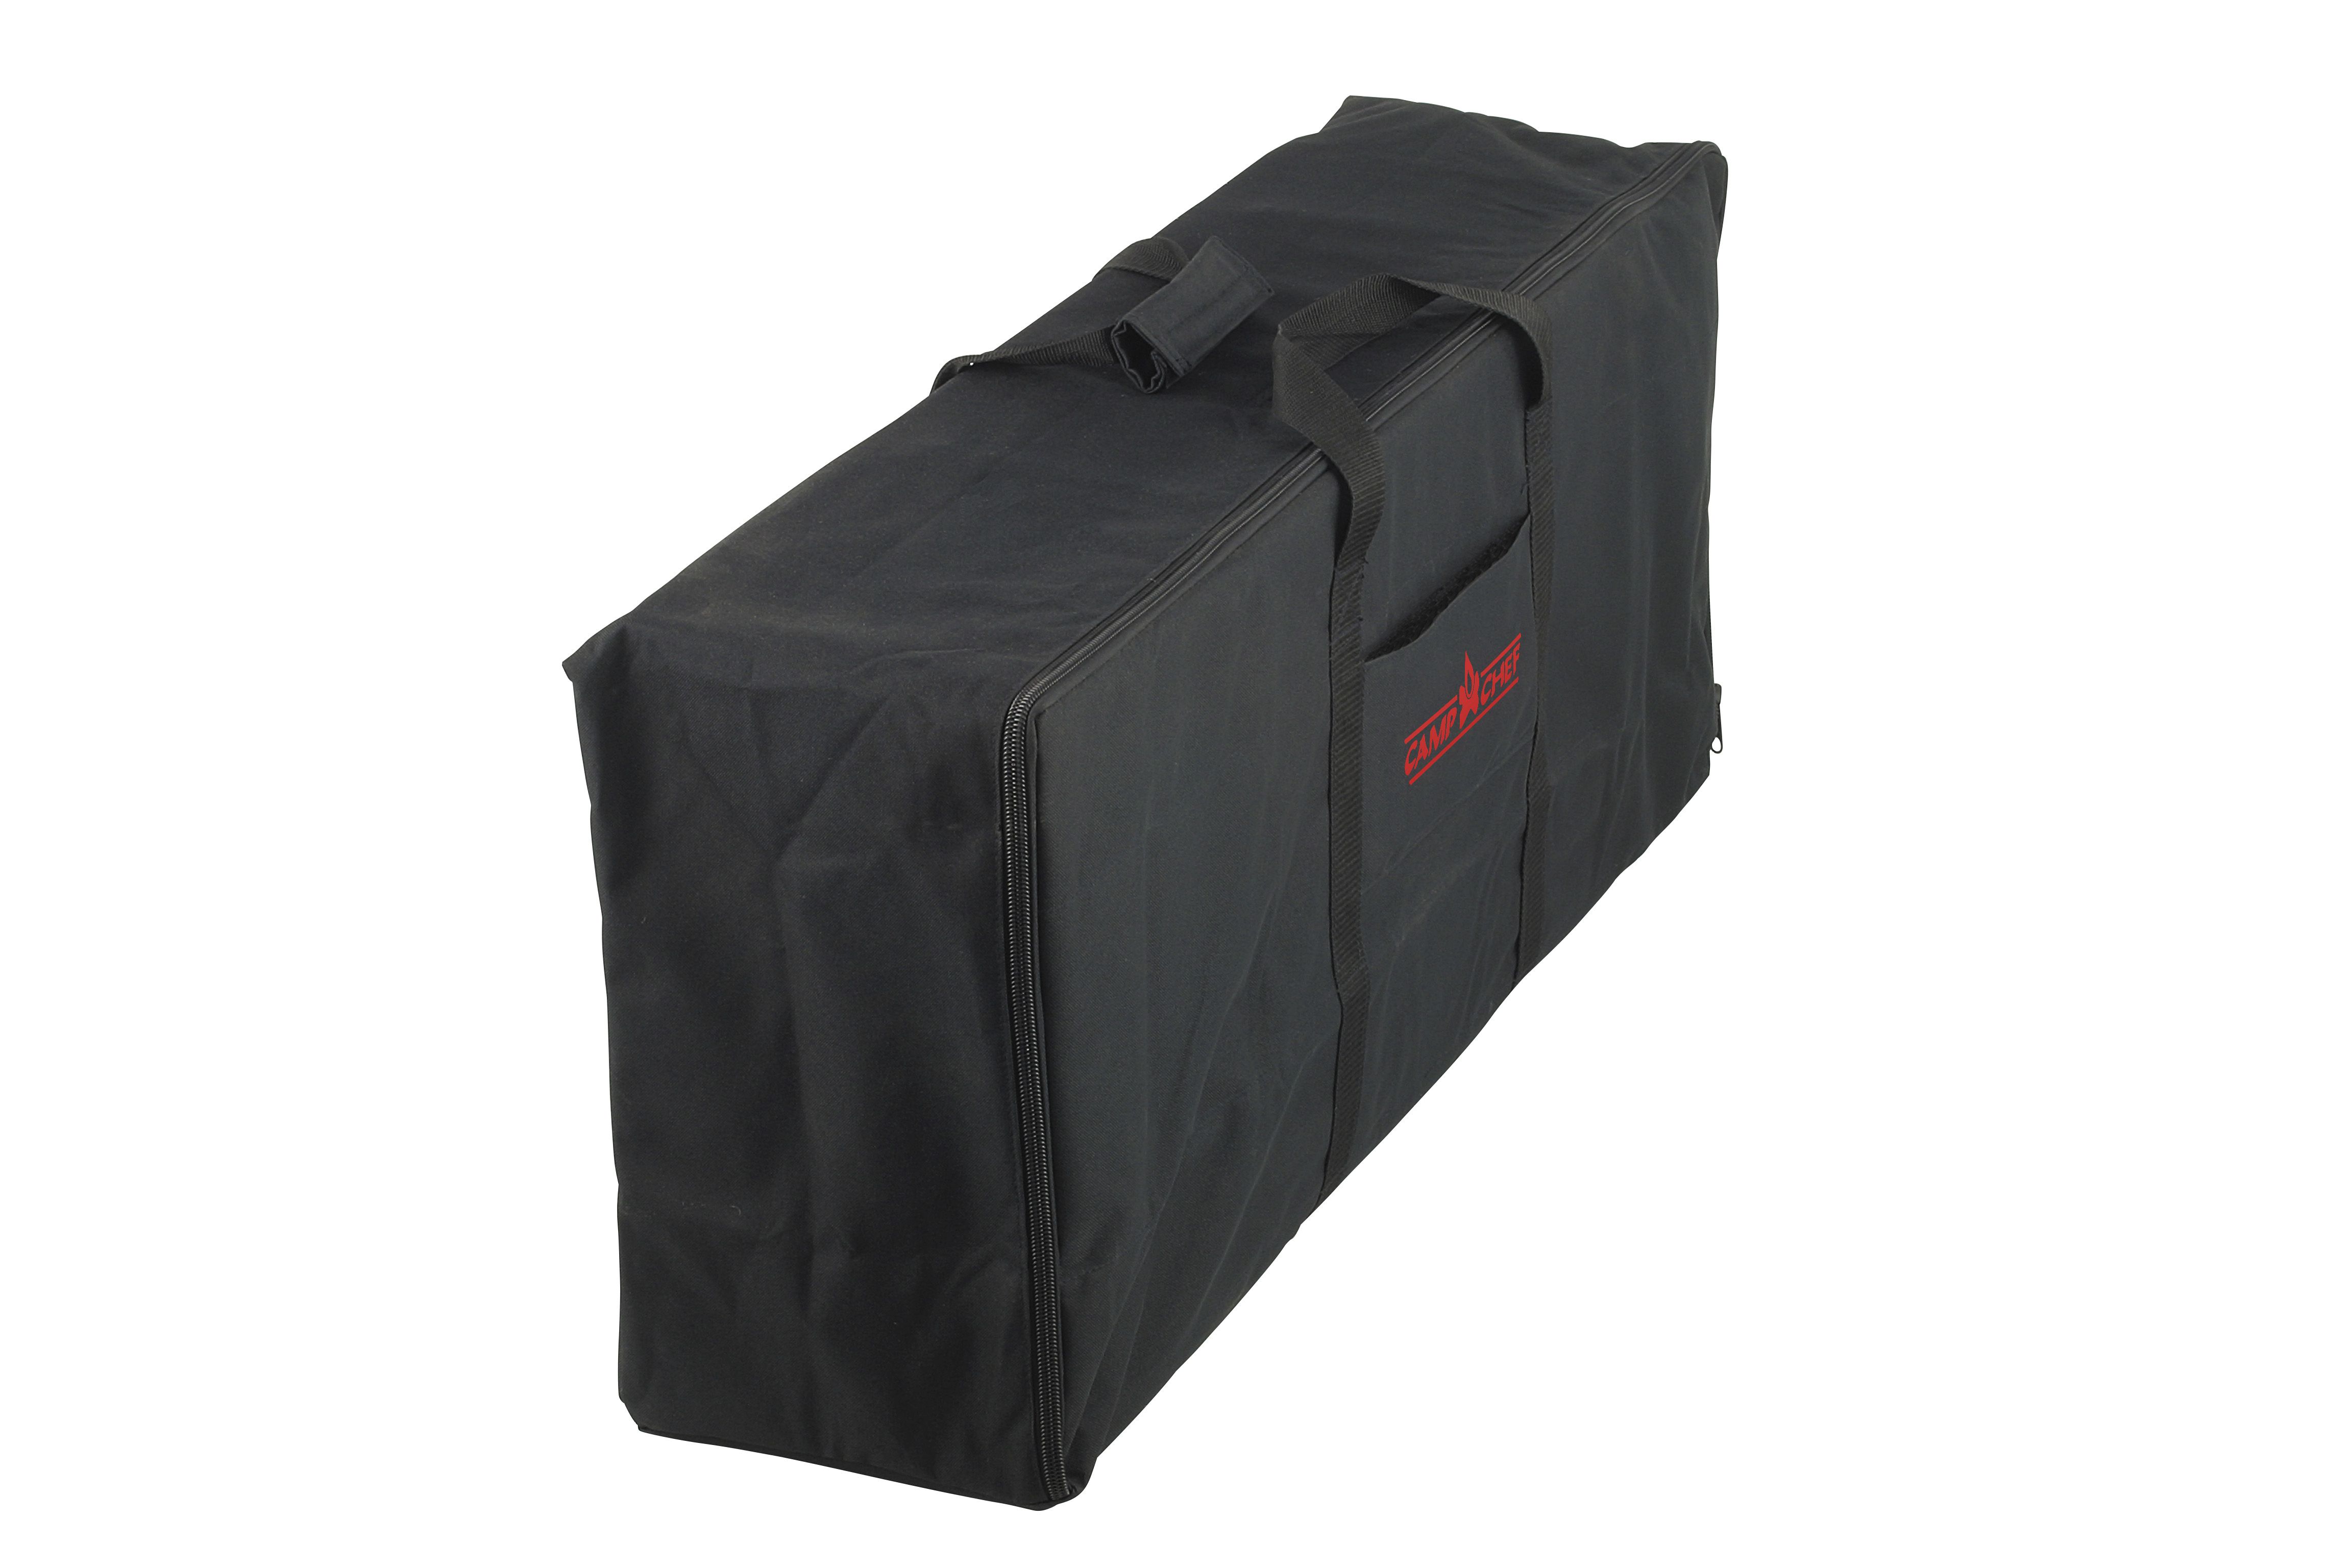 Camp Chef Carry Bag 90, CB90 for Camp Chef 3-Burner Stoves, Black 600 Denier Cordura Fabric, 17" W x 40.5" L x 10" H - image 5 of 6